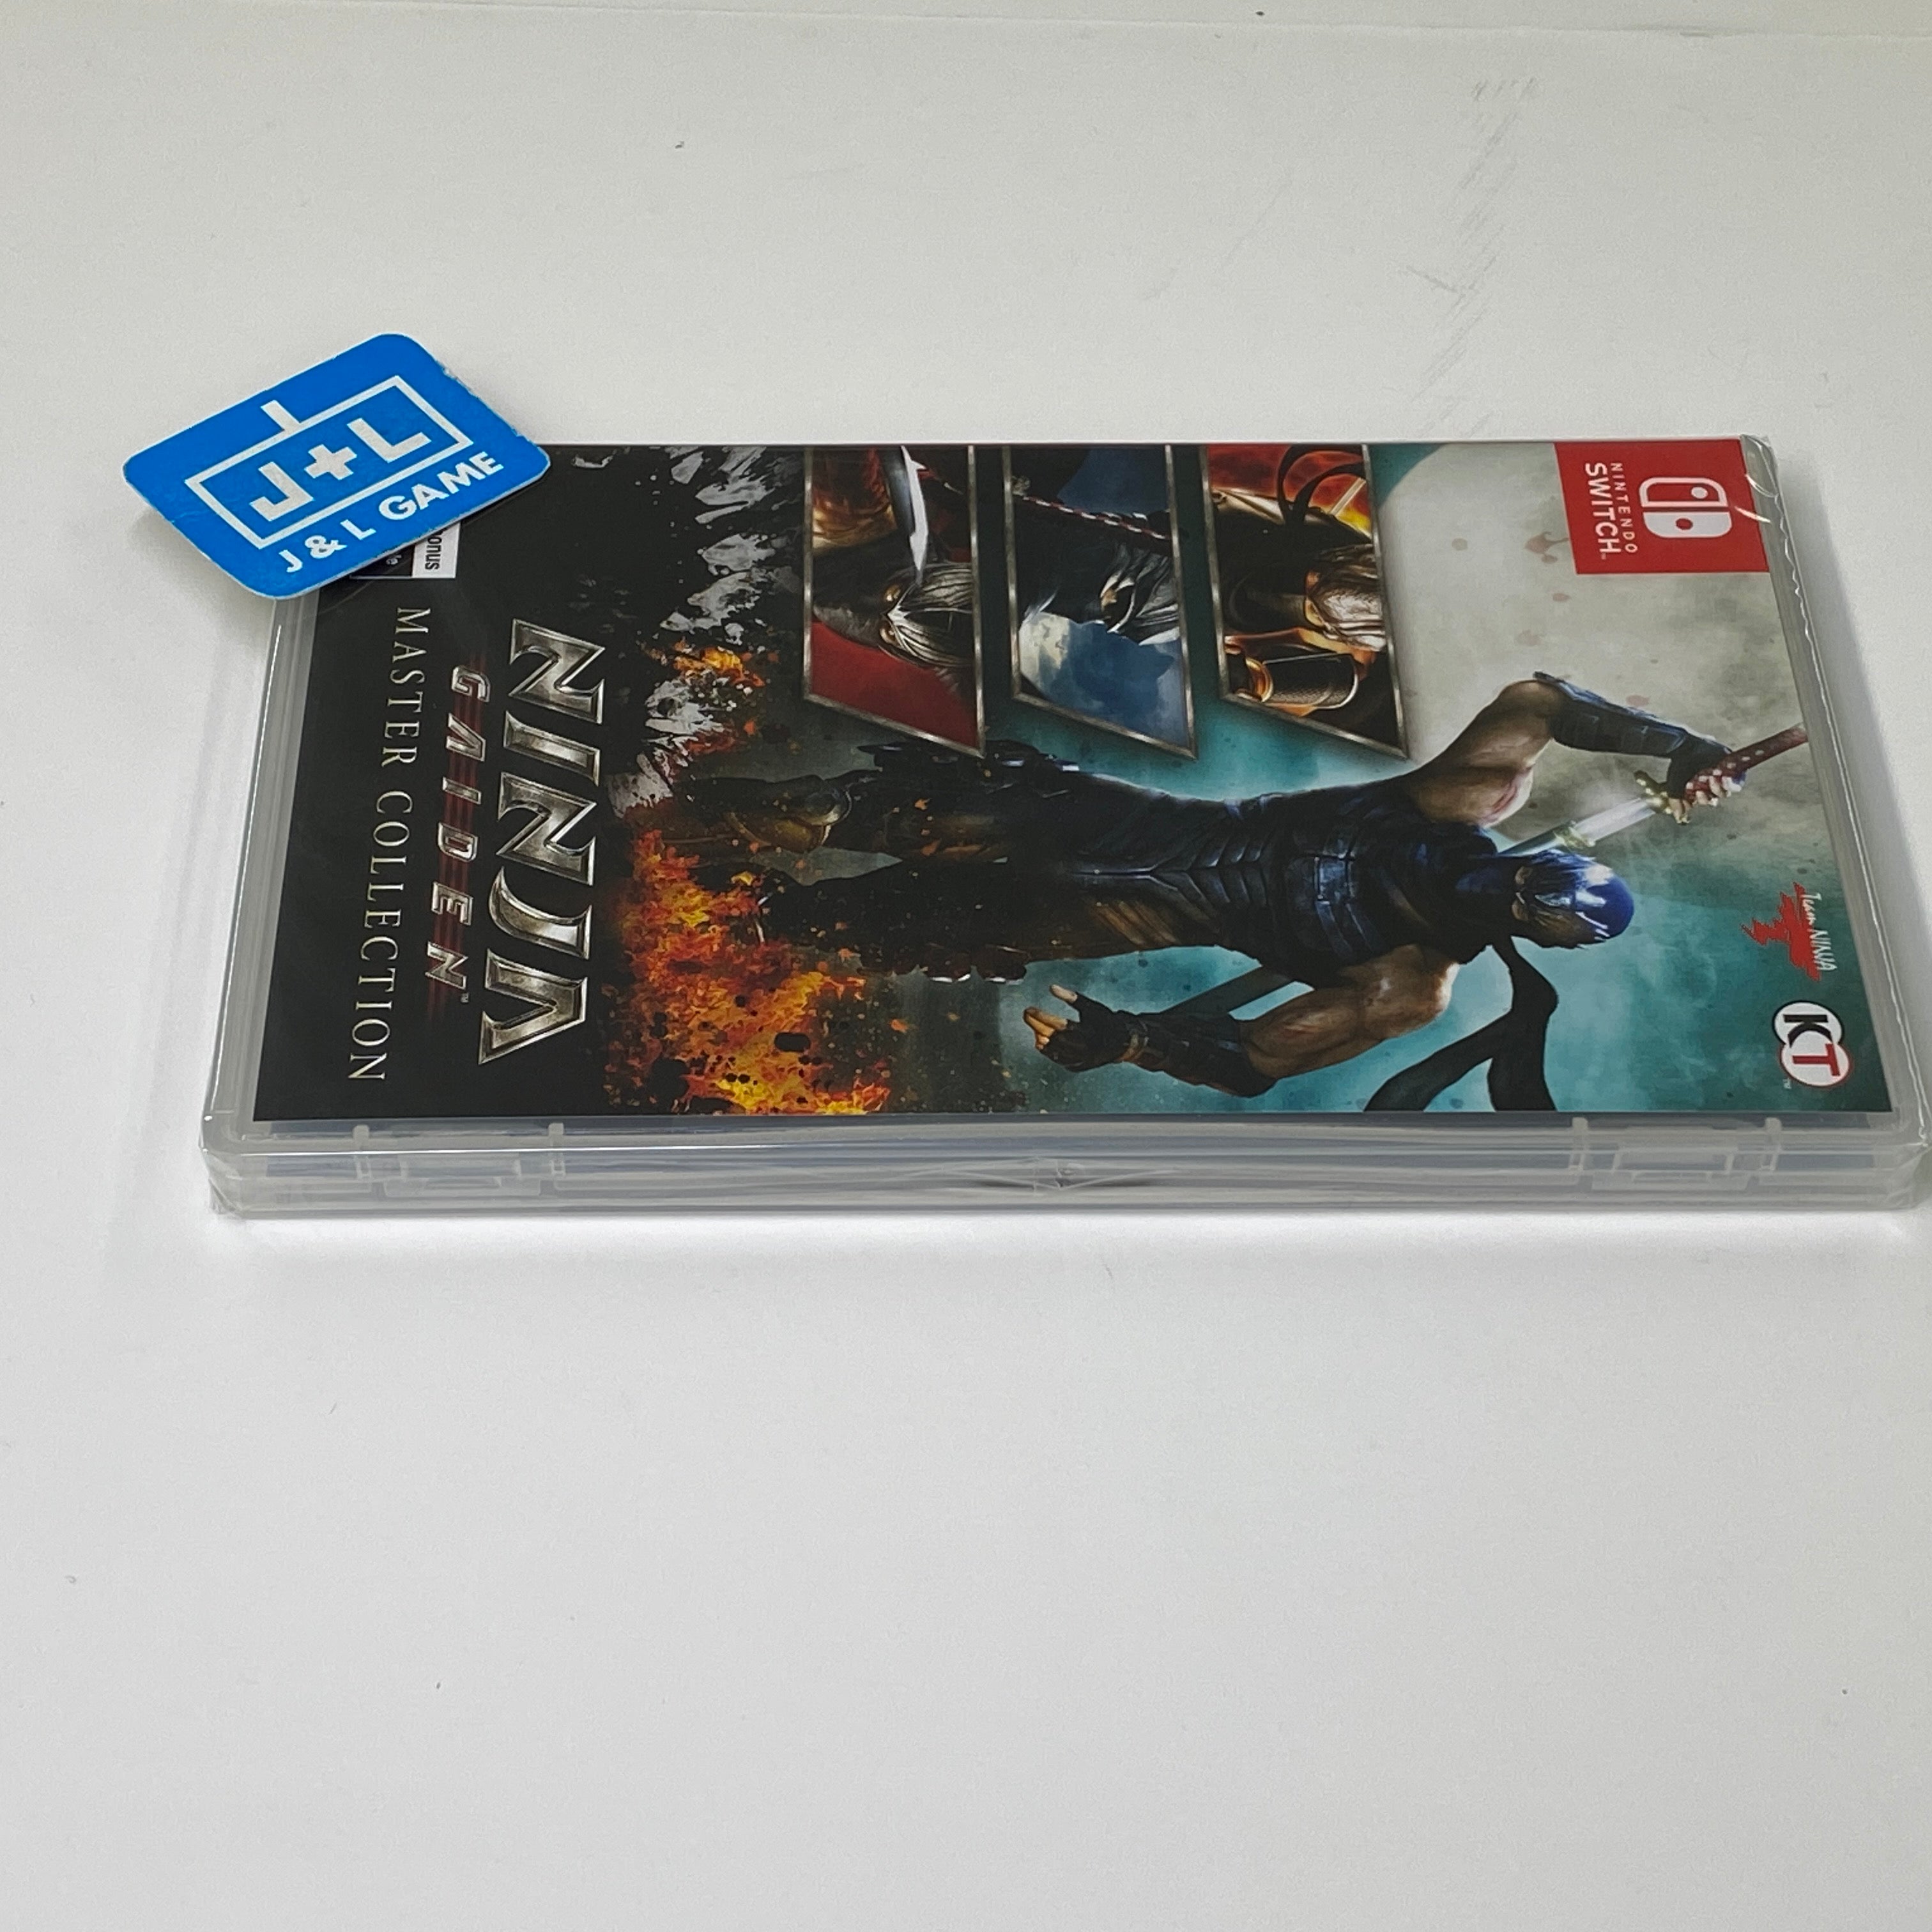 Ninja Gaiden: Master Collection - (NSW) Nintendo Switch (Asia Import) Video Games Koei Tecmo Games   